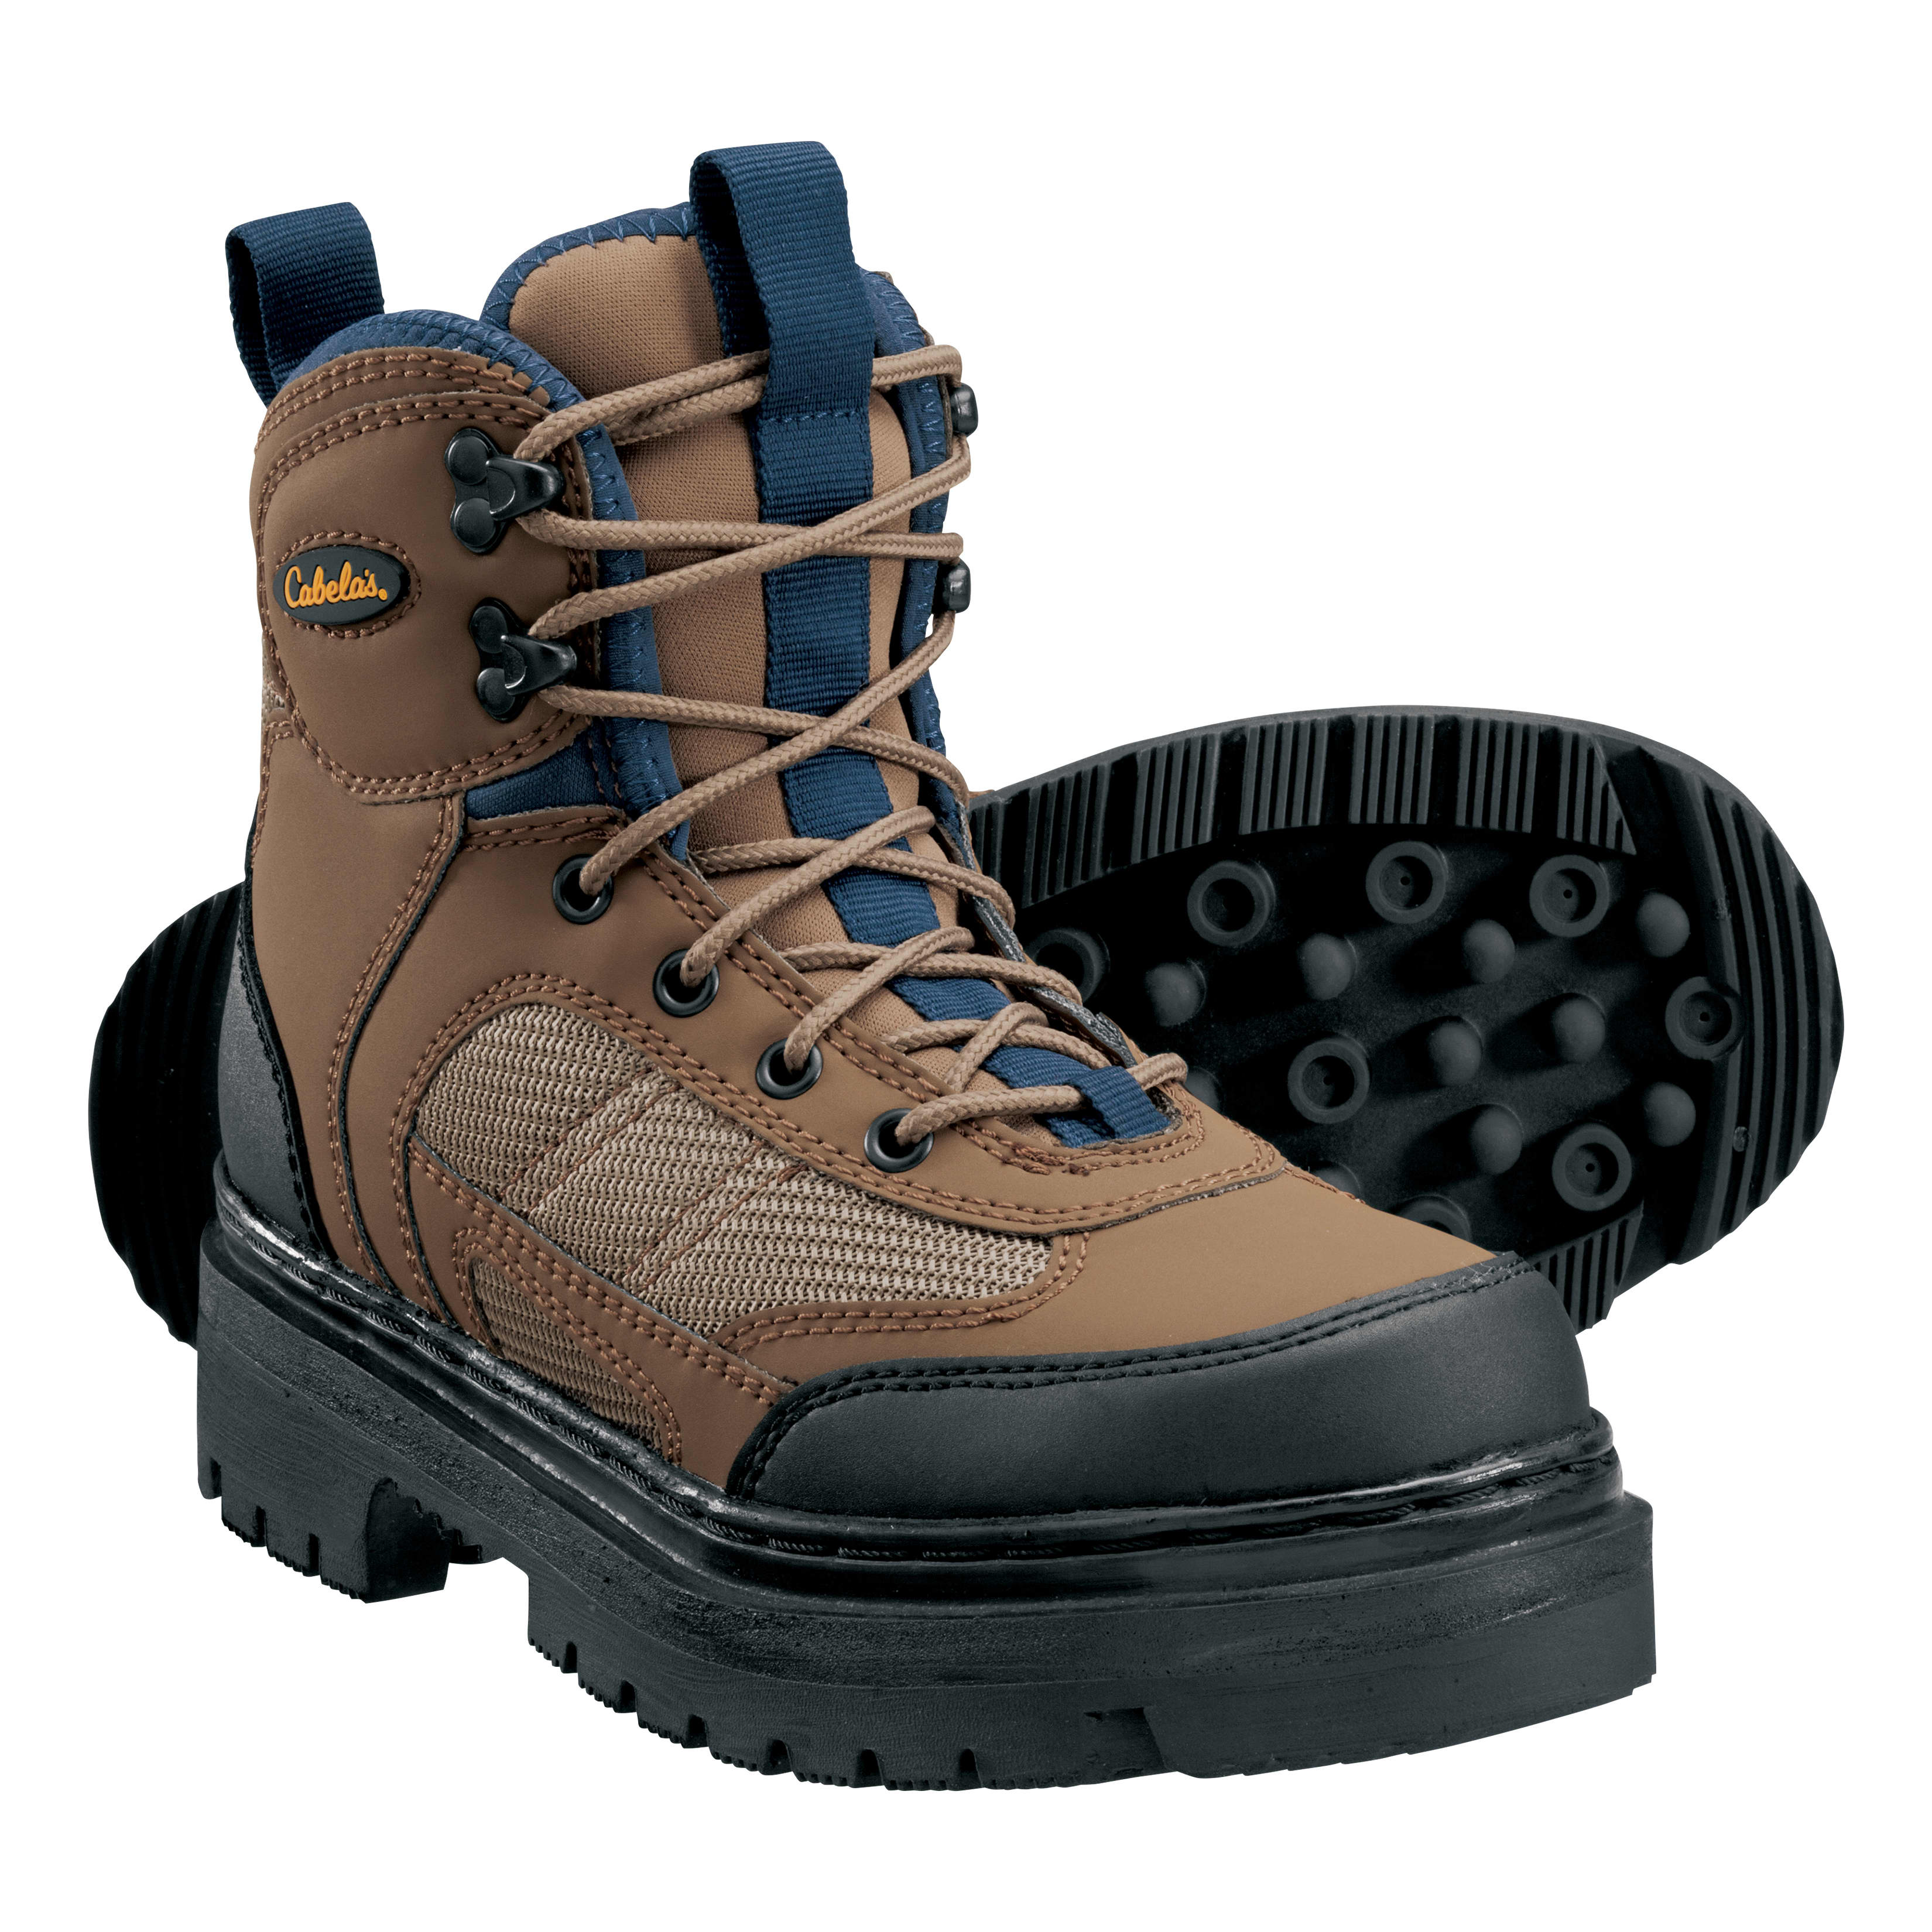  Kylebooker Men's Fishing Hunting Wading Boots Lightweight  Anti-Slip Felt Soles Waders Shoes Green (Felt Sole, 8) : Sports & Outdoors